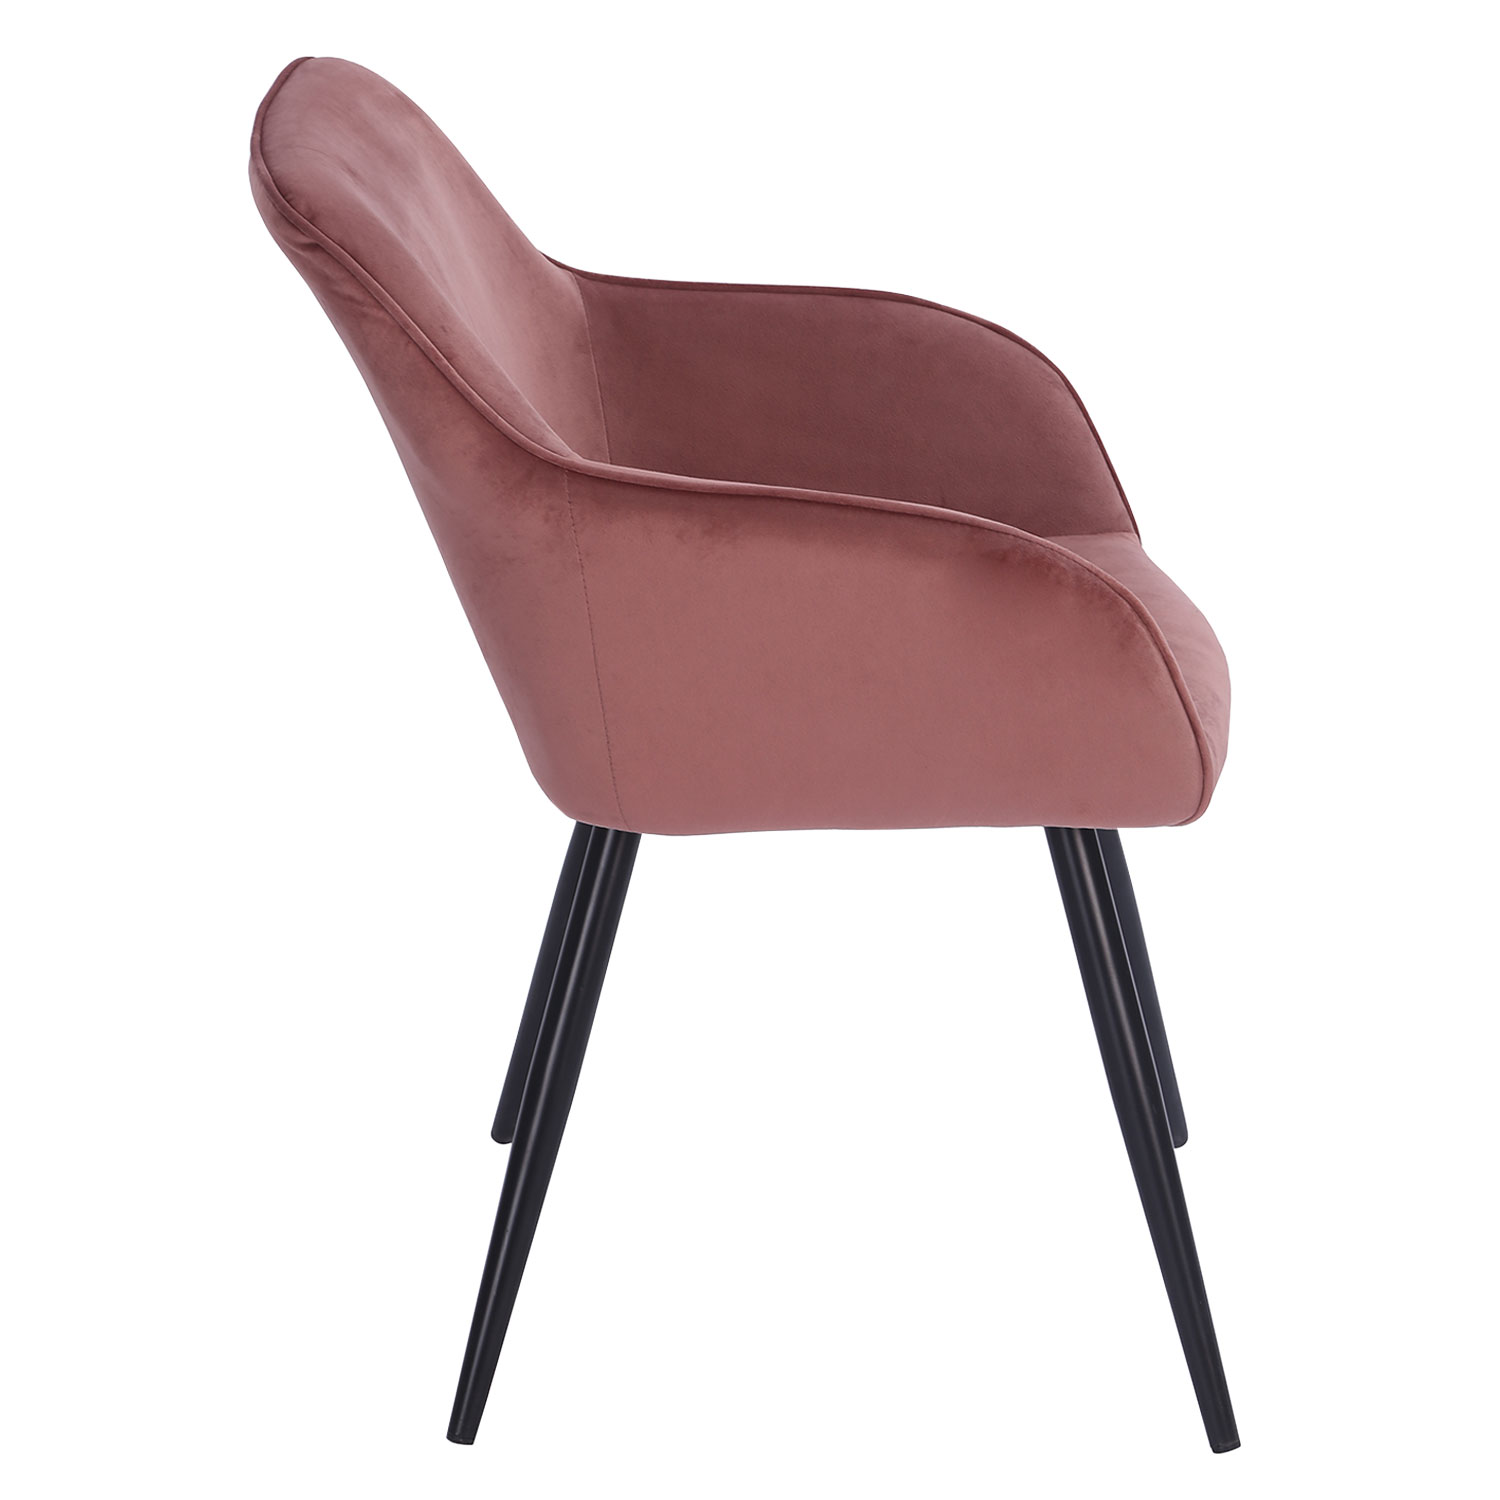 Cadeira vintage GISELE de veludo rosa